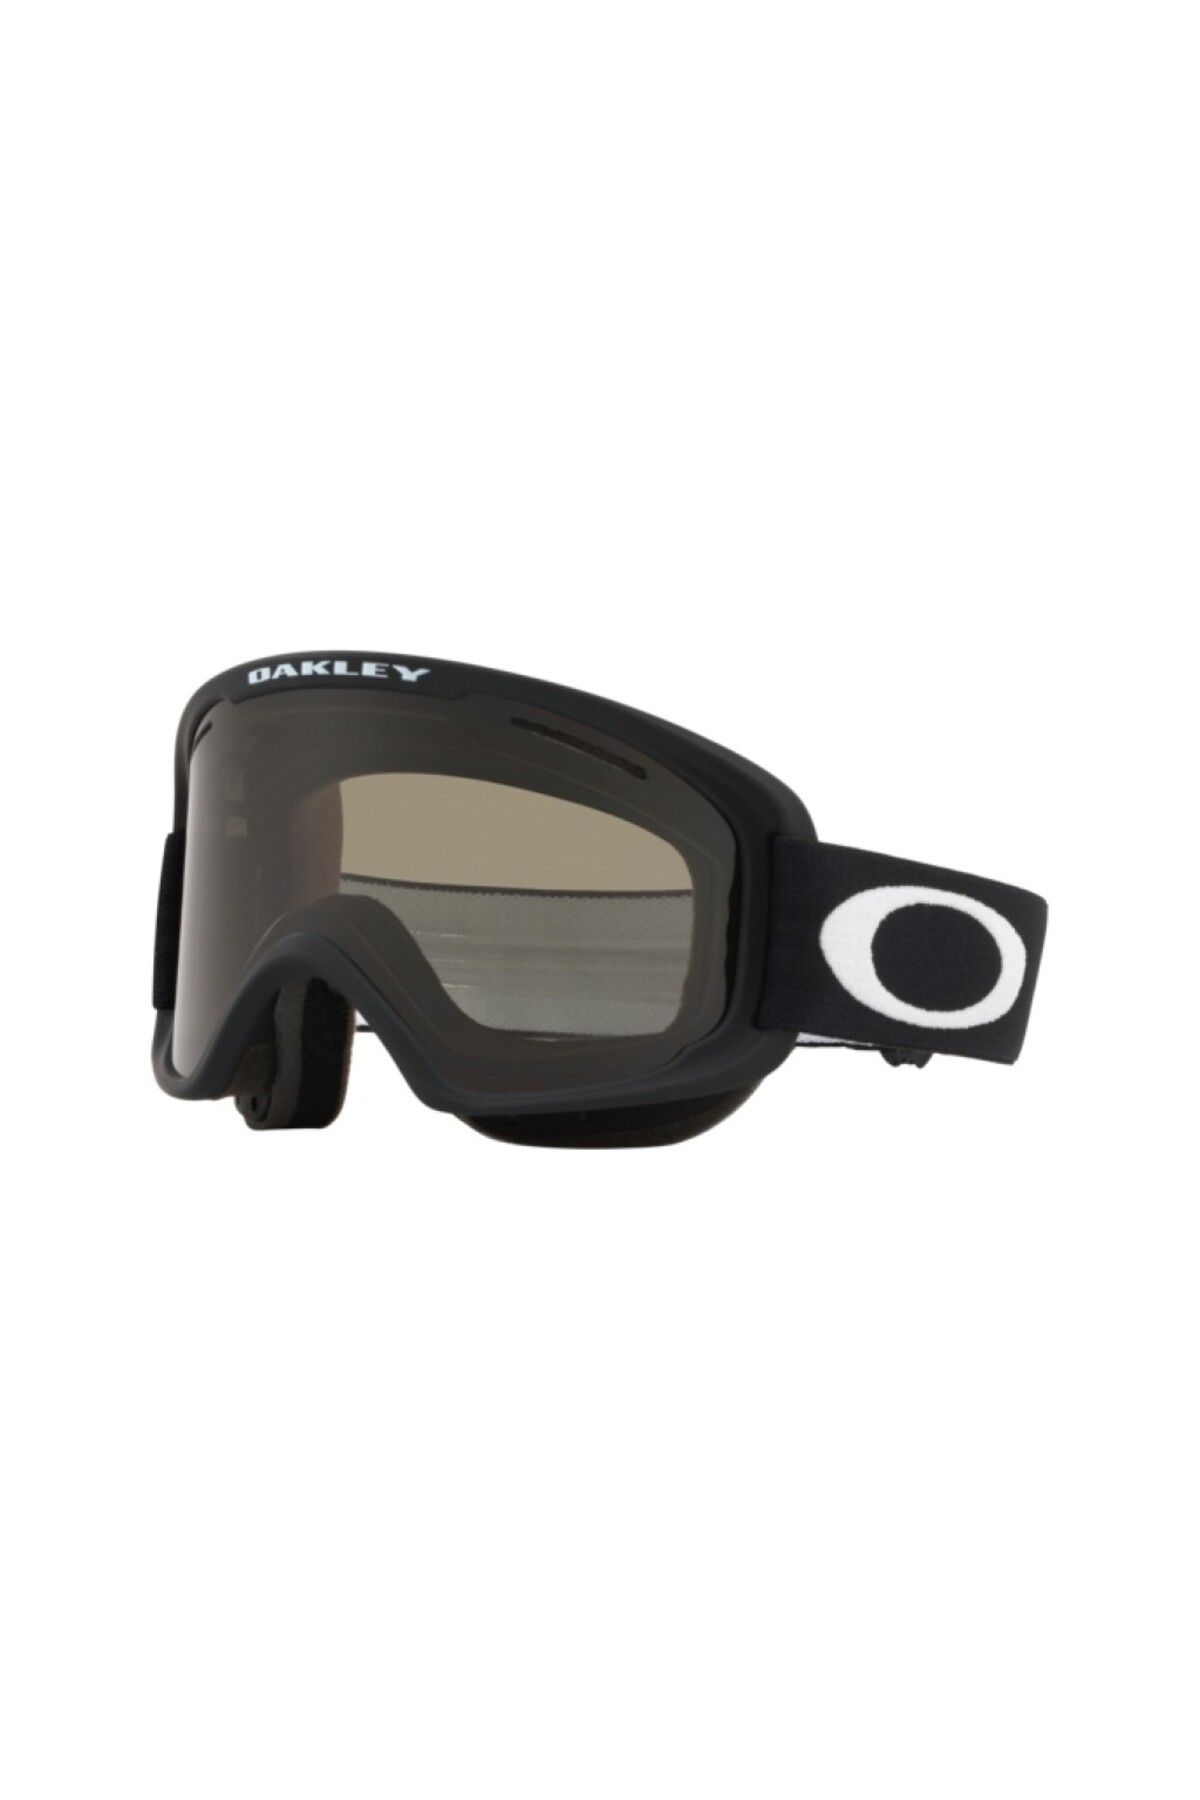 Oakley O-Frame 2.0 Pro L Goggles 712402 Matte Black Dark Grey